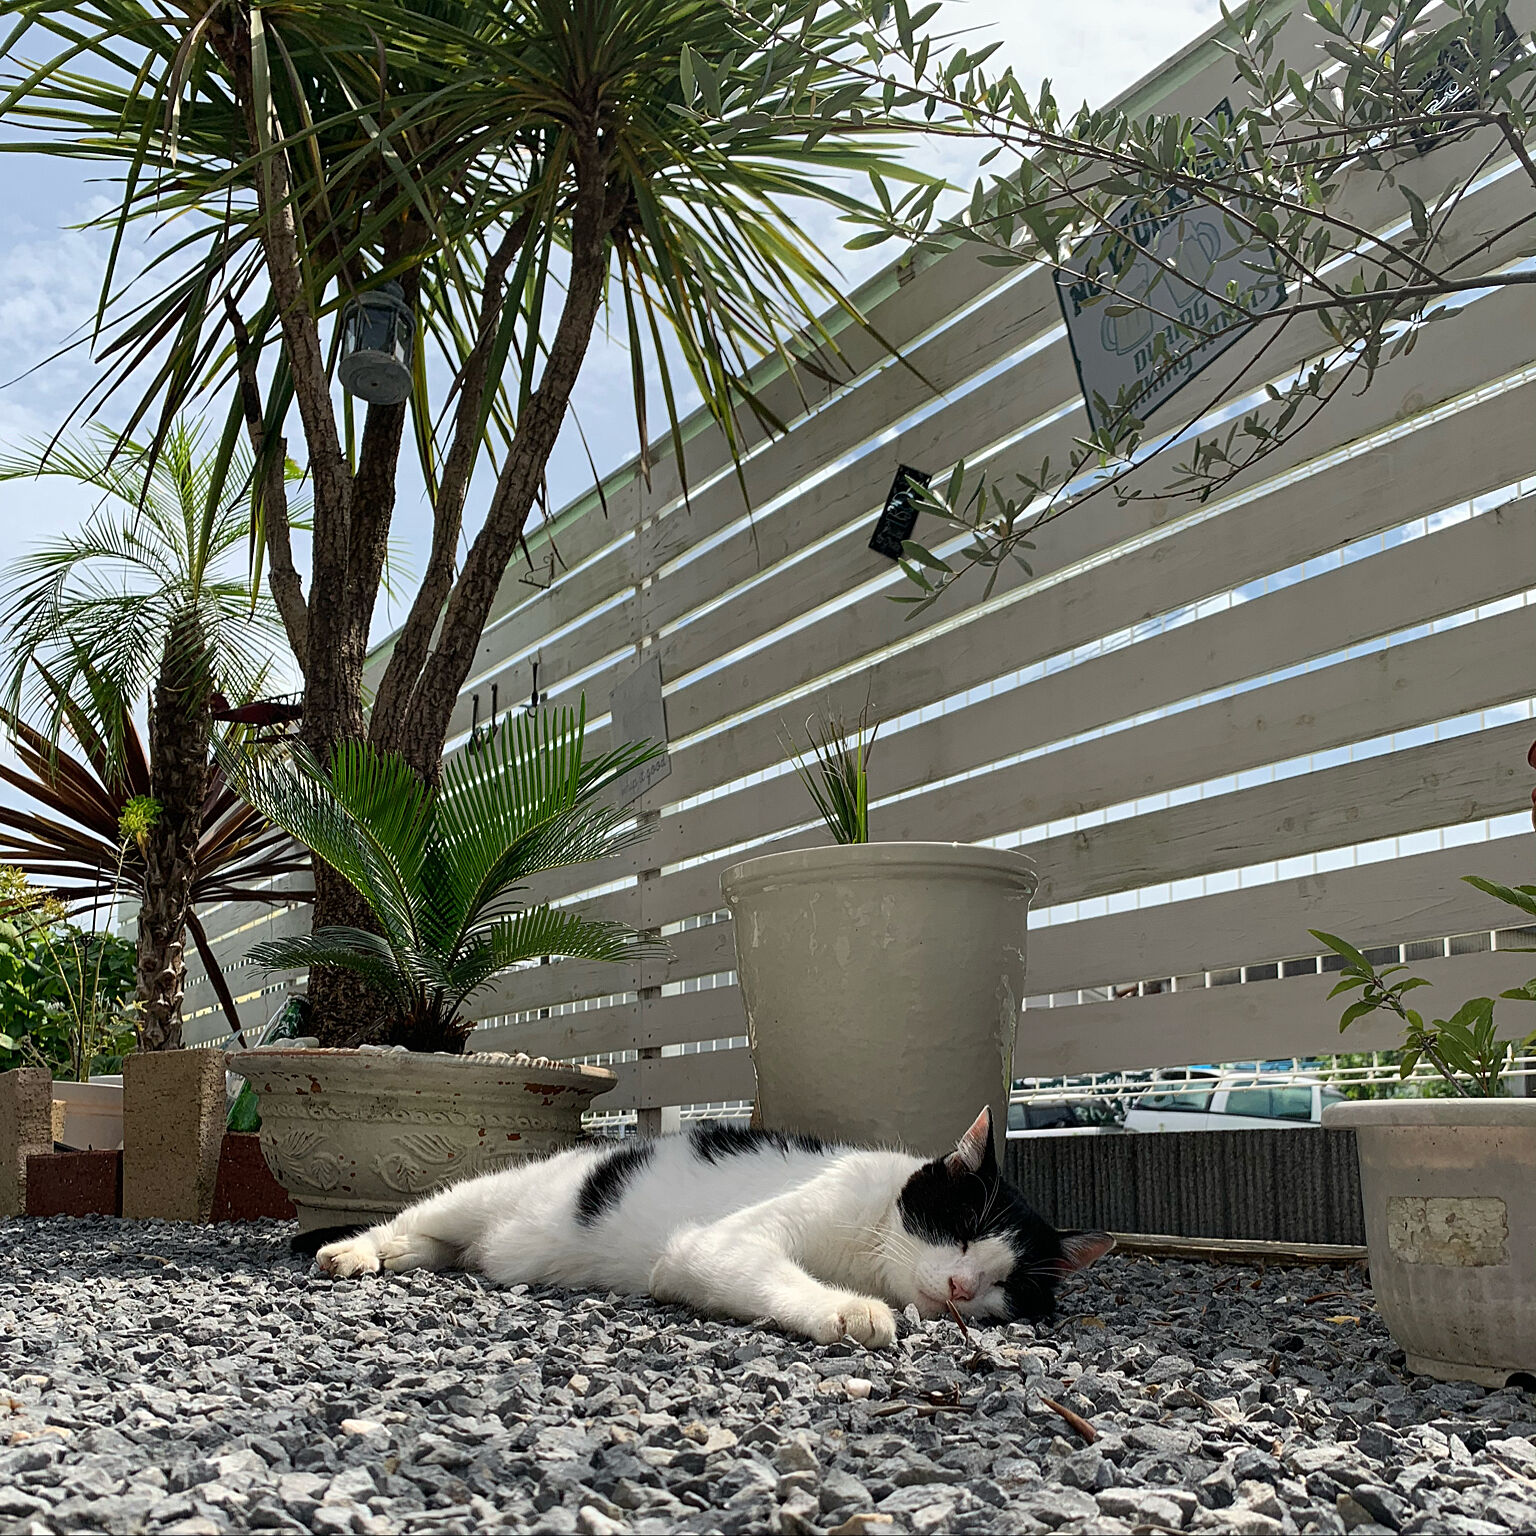 odekoさん（Room No. 987193）ウッドフェンスで出来た陰で気持ちよく眠る猫ちゃん🐈自然素材は動物にも優しい